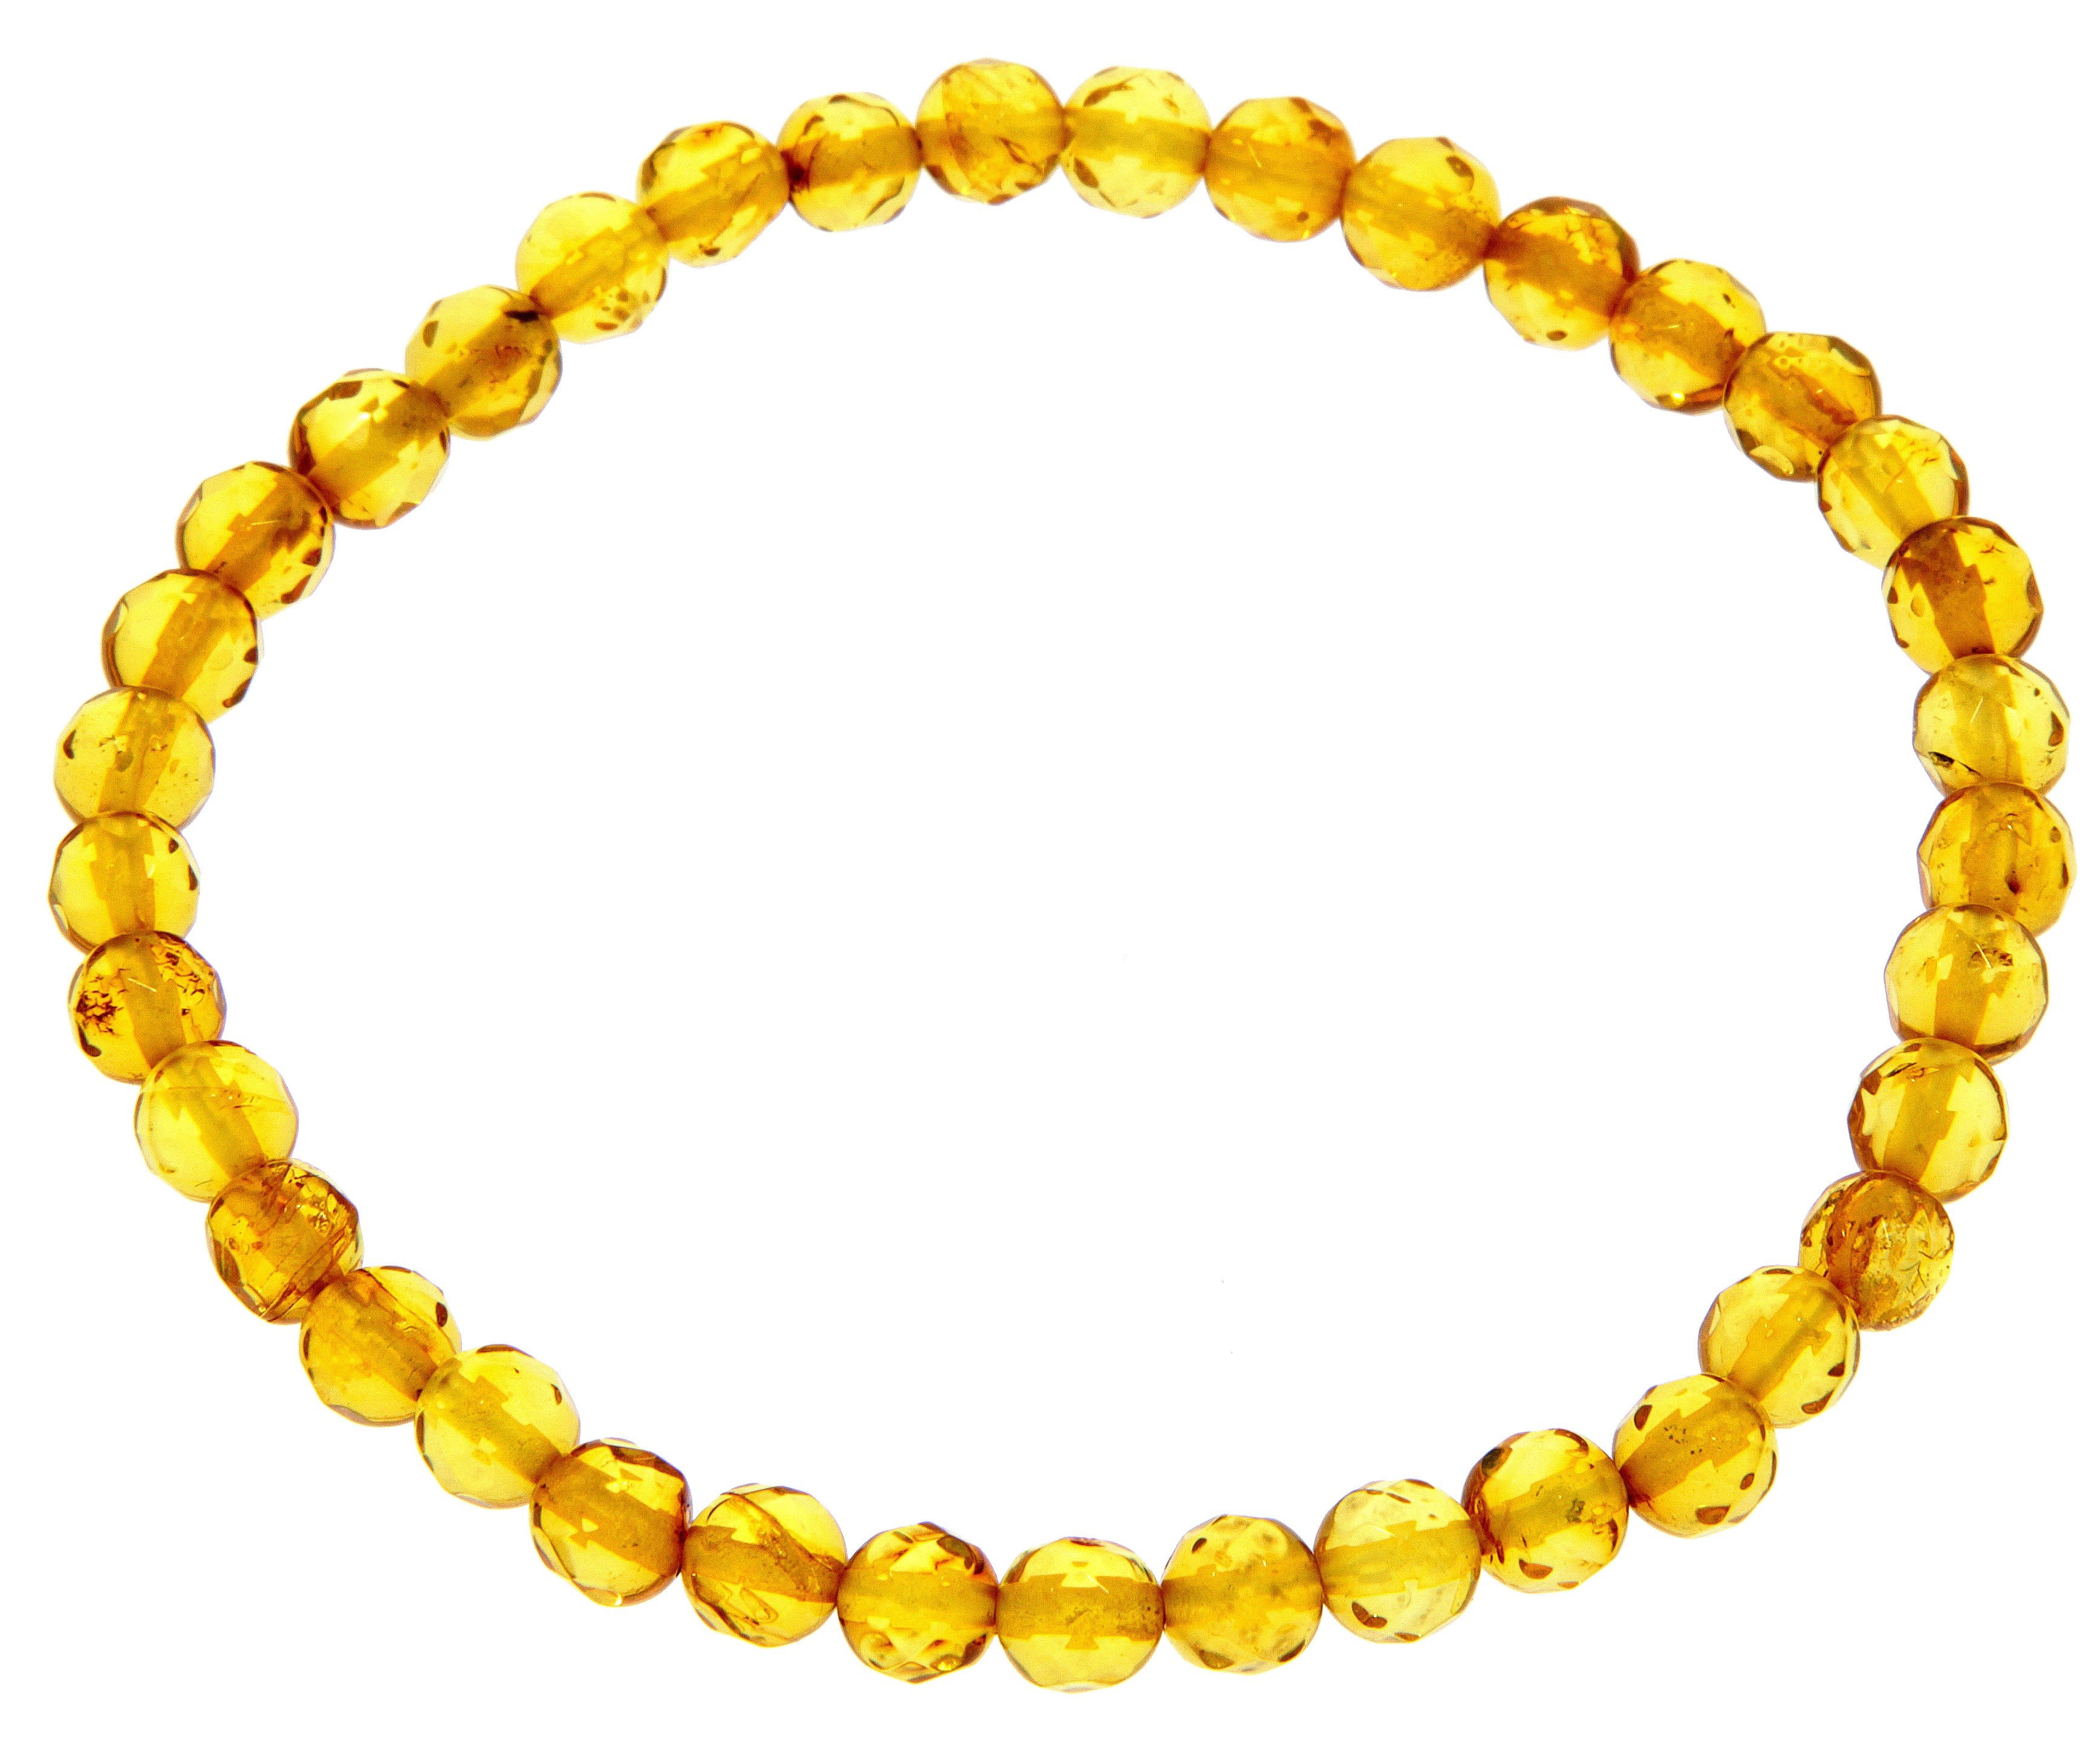 Genuine Baltic Amber Elastic Bracelet Unisex - Faceted Amber Beads 5x5 mm - BT0165